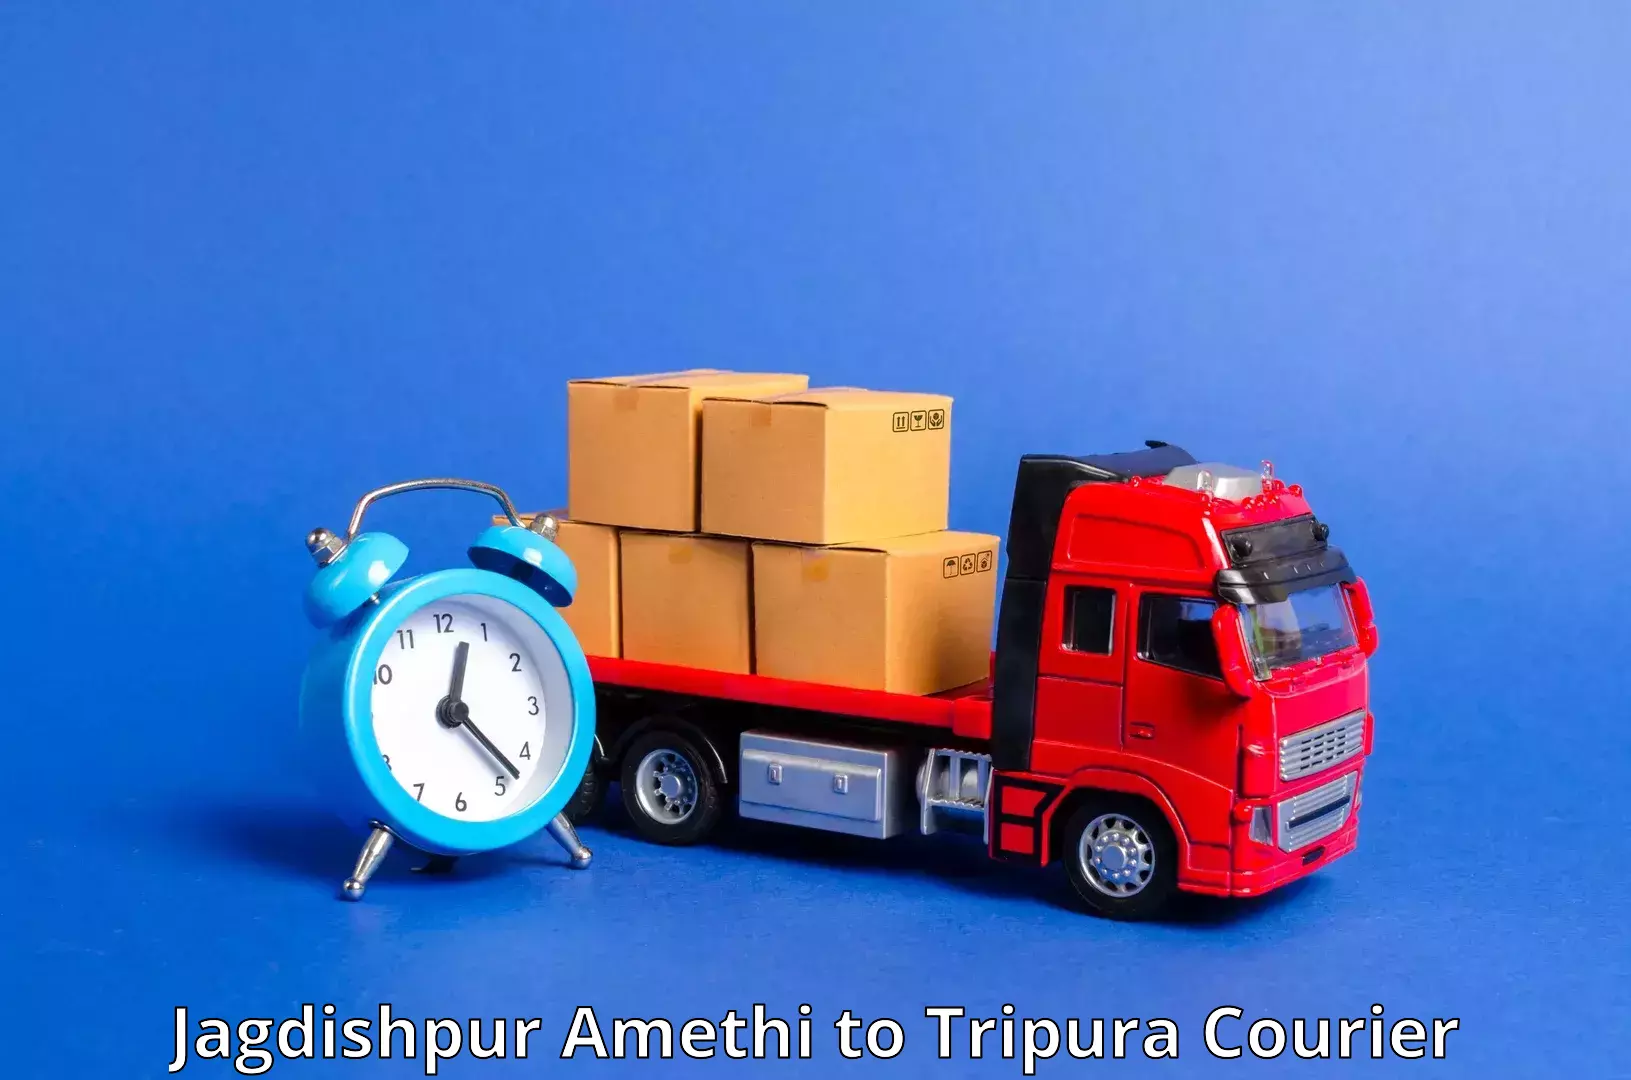 Cost-effective courier options Jagdishpur Amethi to Udaipur Tripura